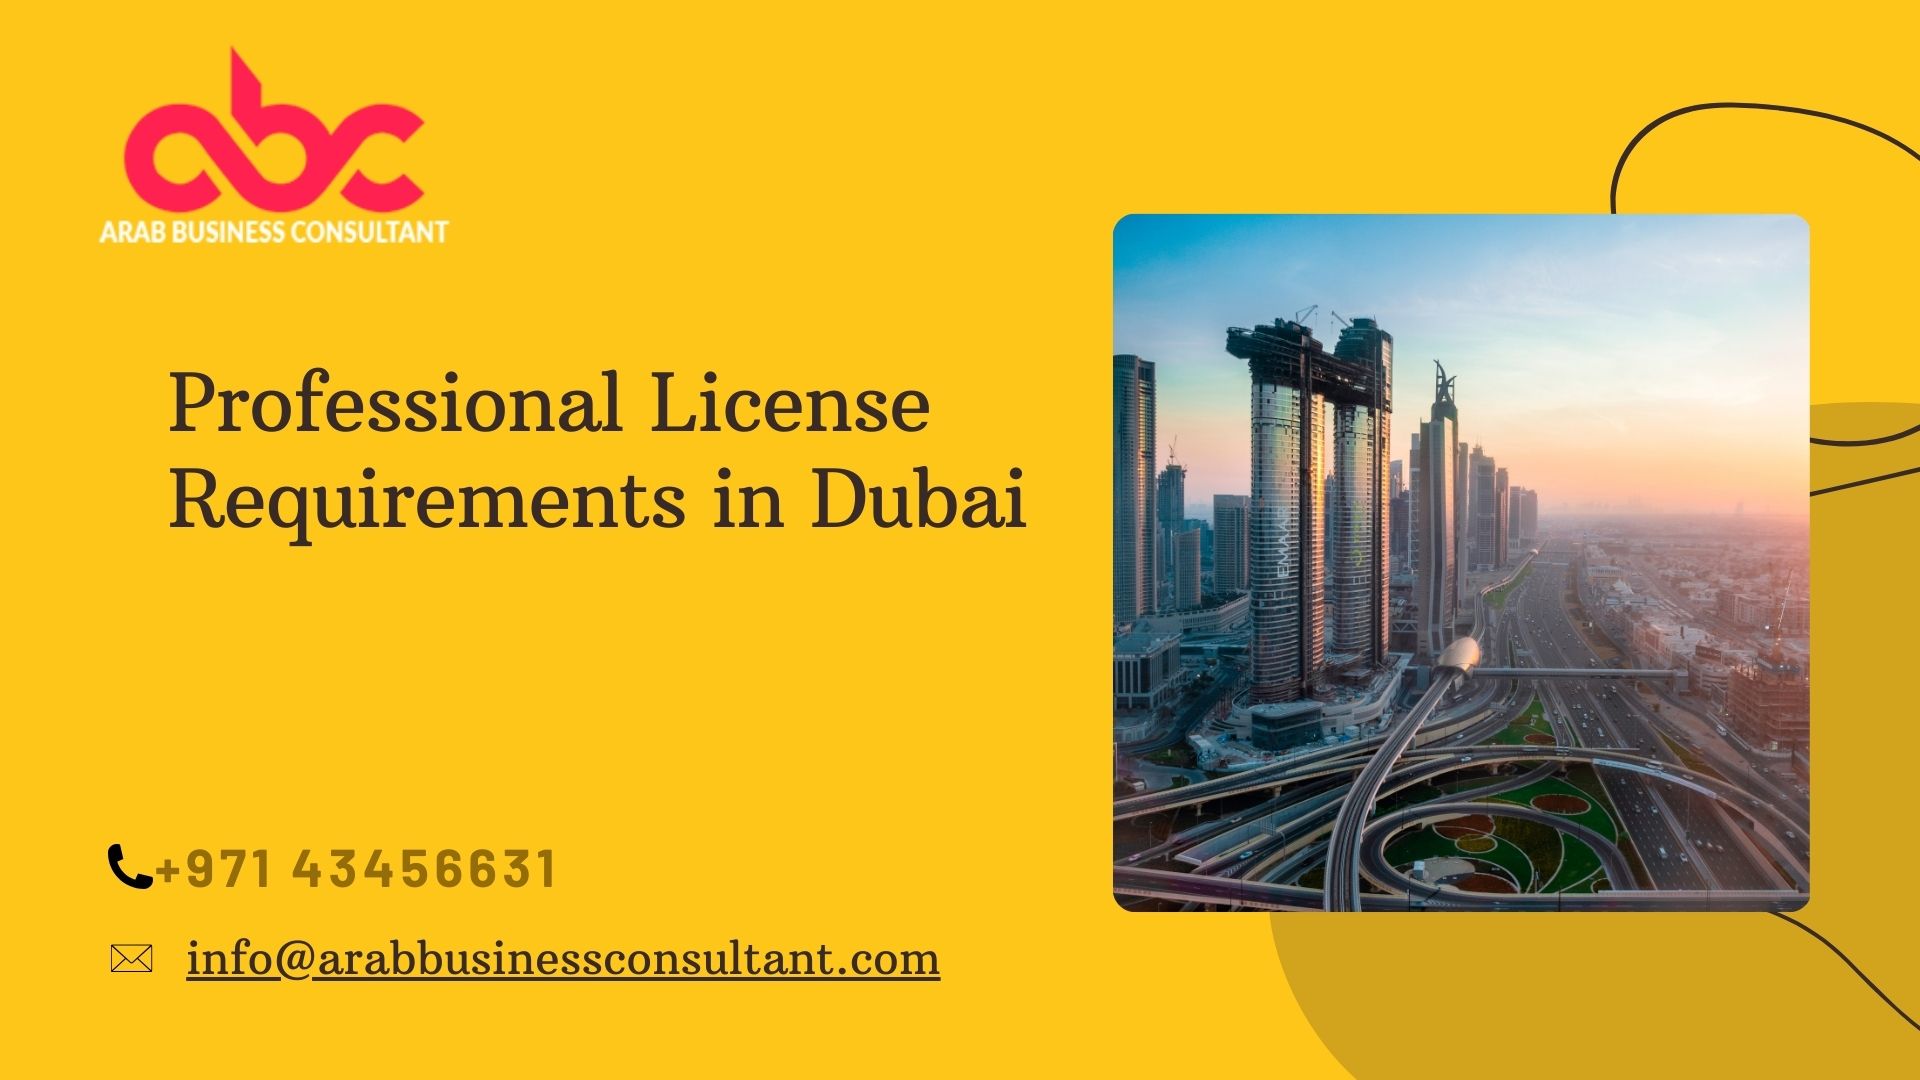 Dubai's Professional License Requirements Explained.